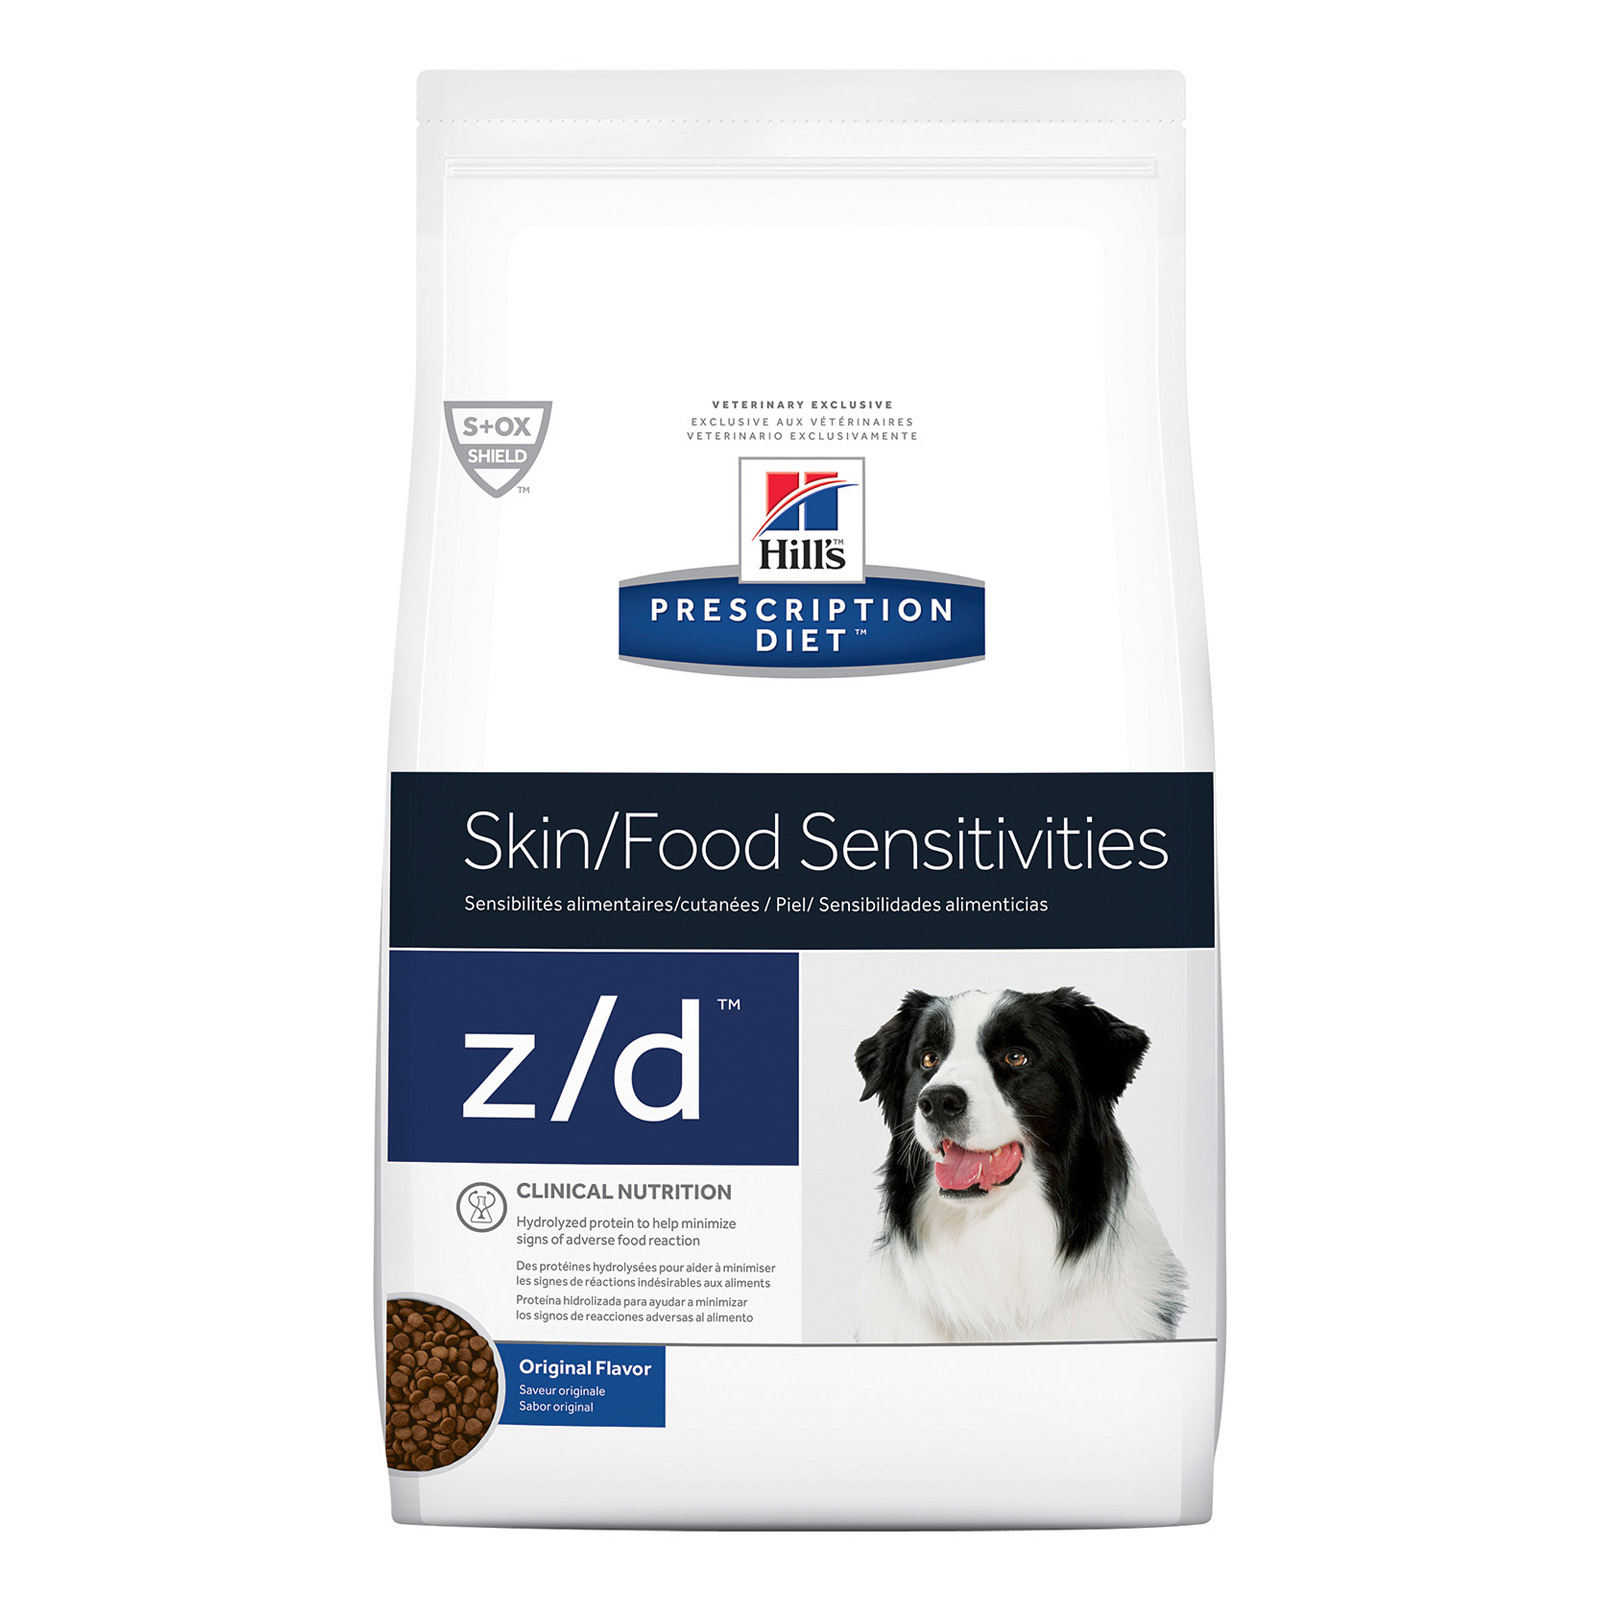 Hill's Prescription Diet z/d Skin/Food Sensitivities Dry Dog Food for Food